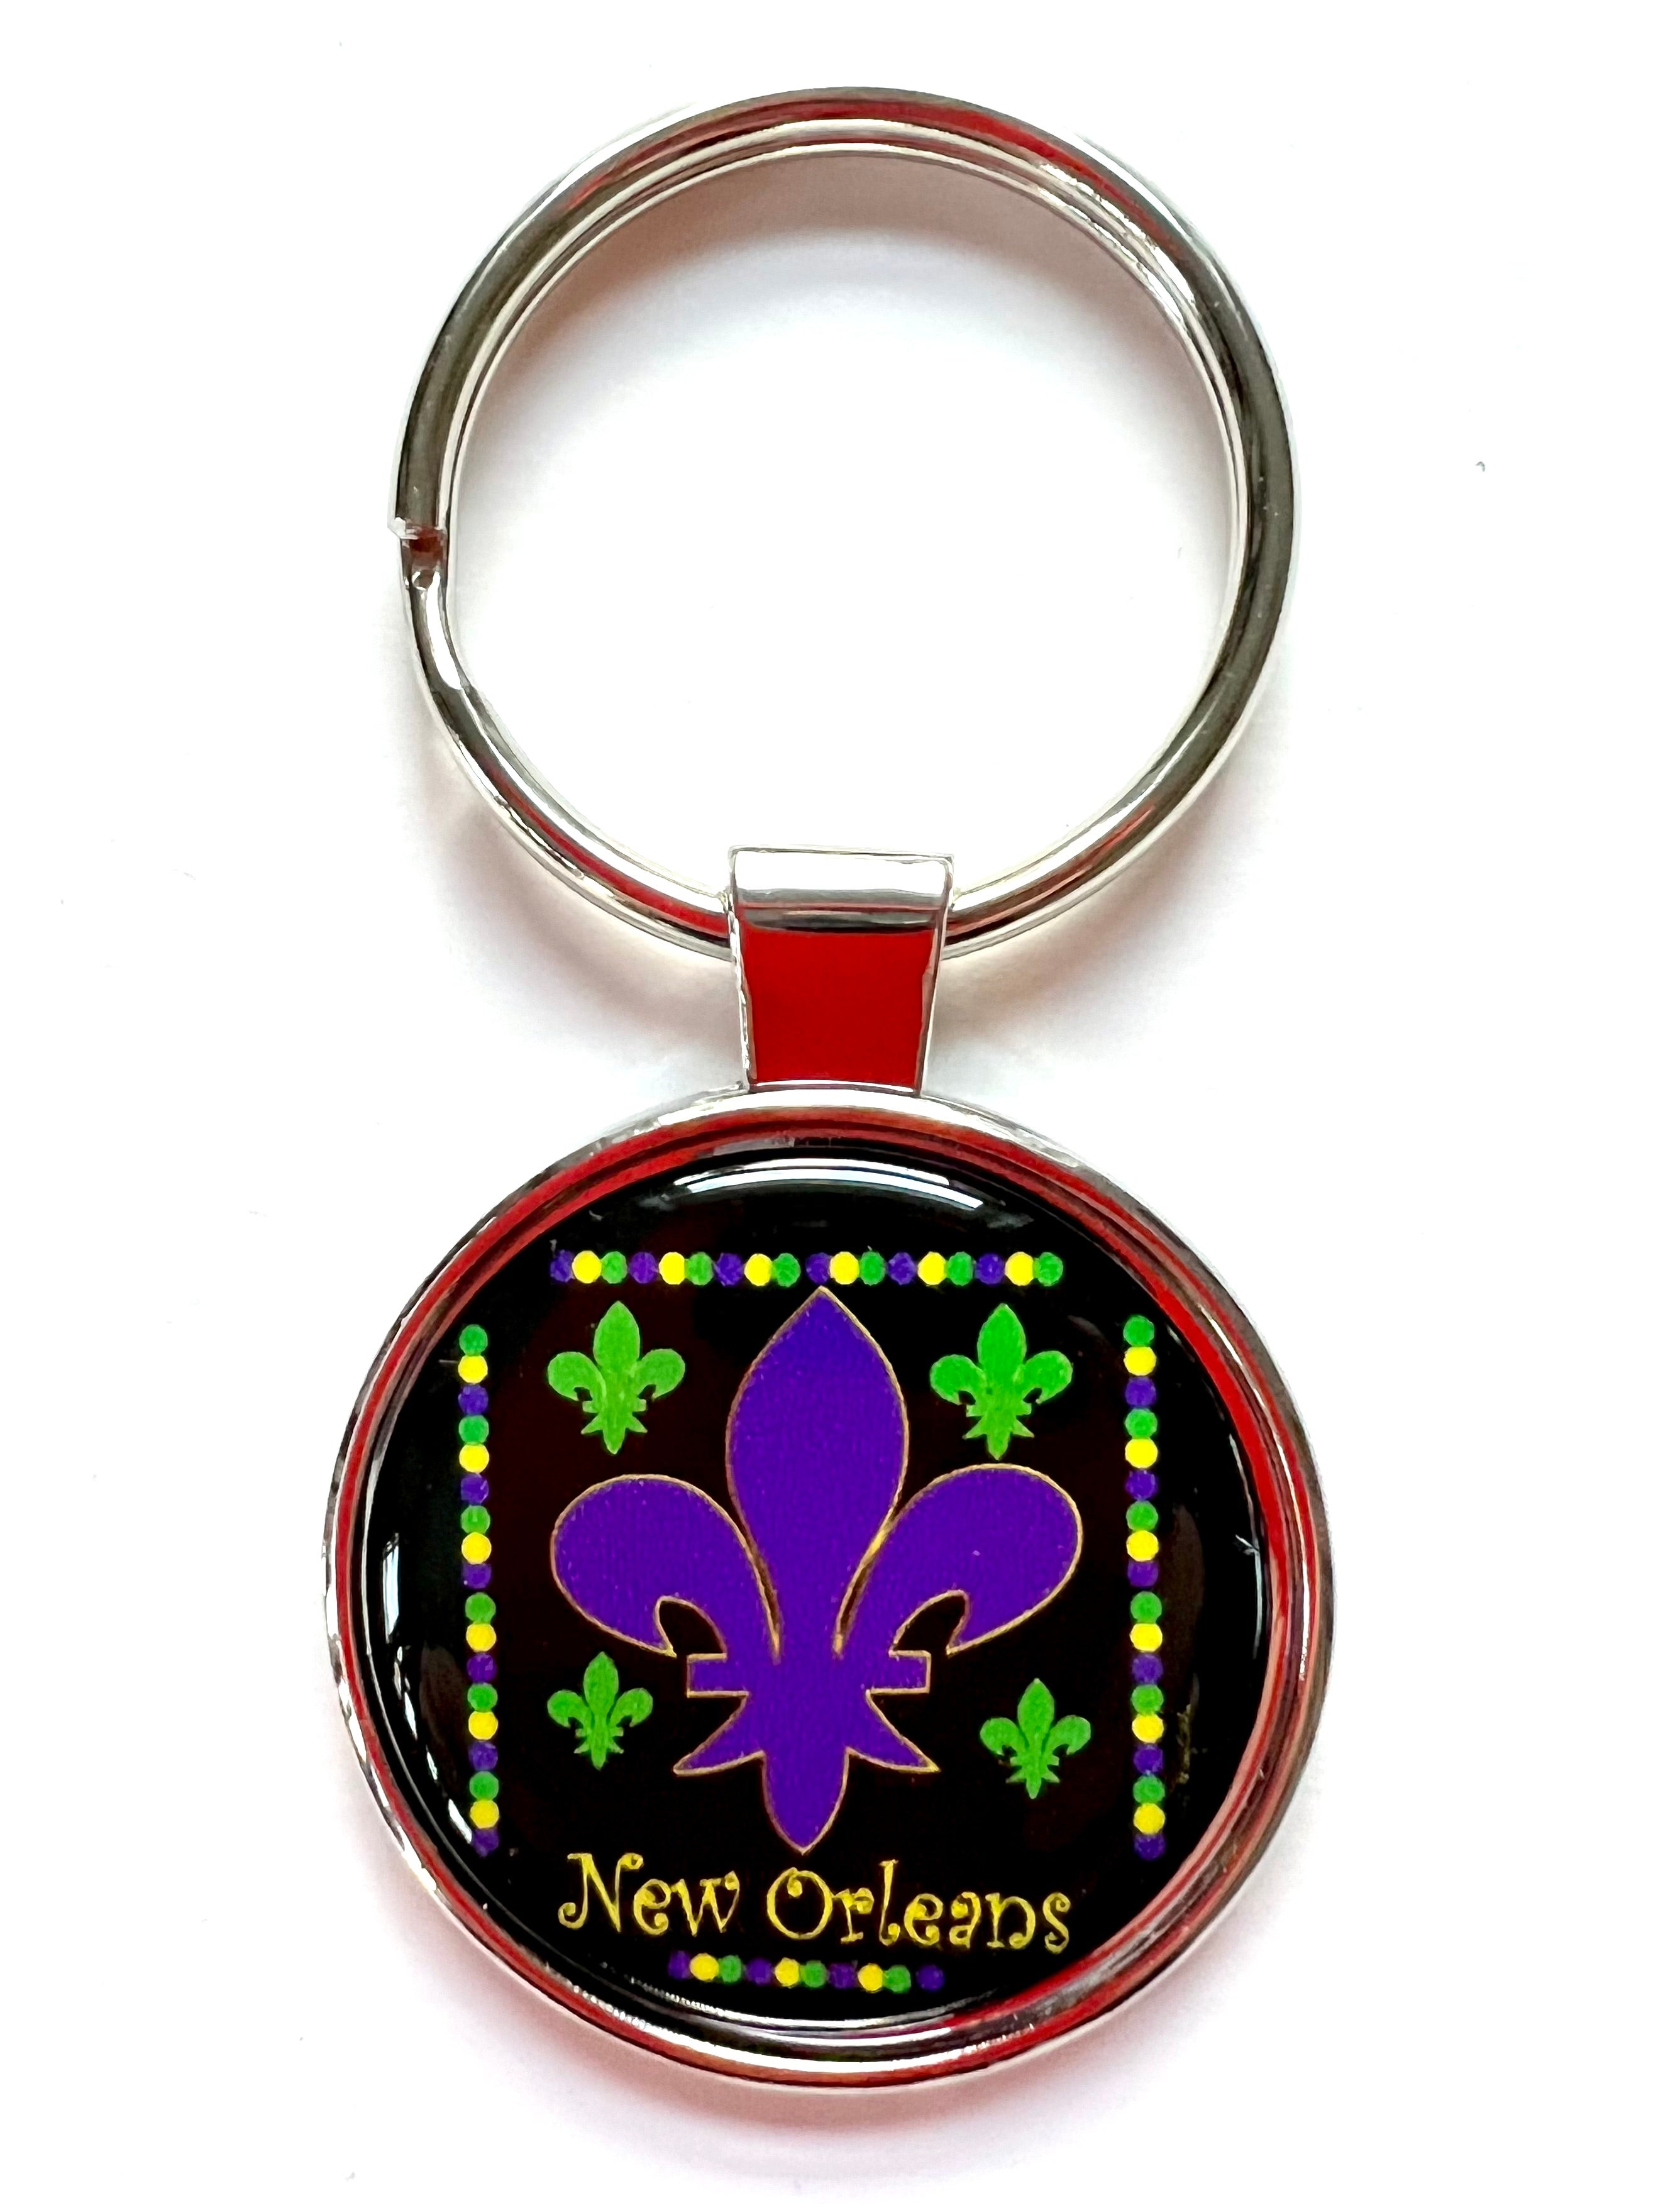 New Orleans Louisiana Advertising Keychain Key Chain Keys